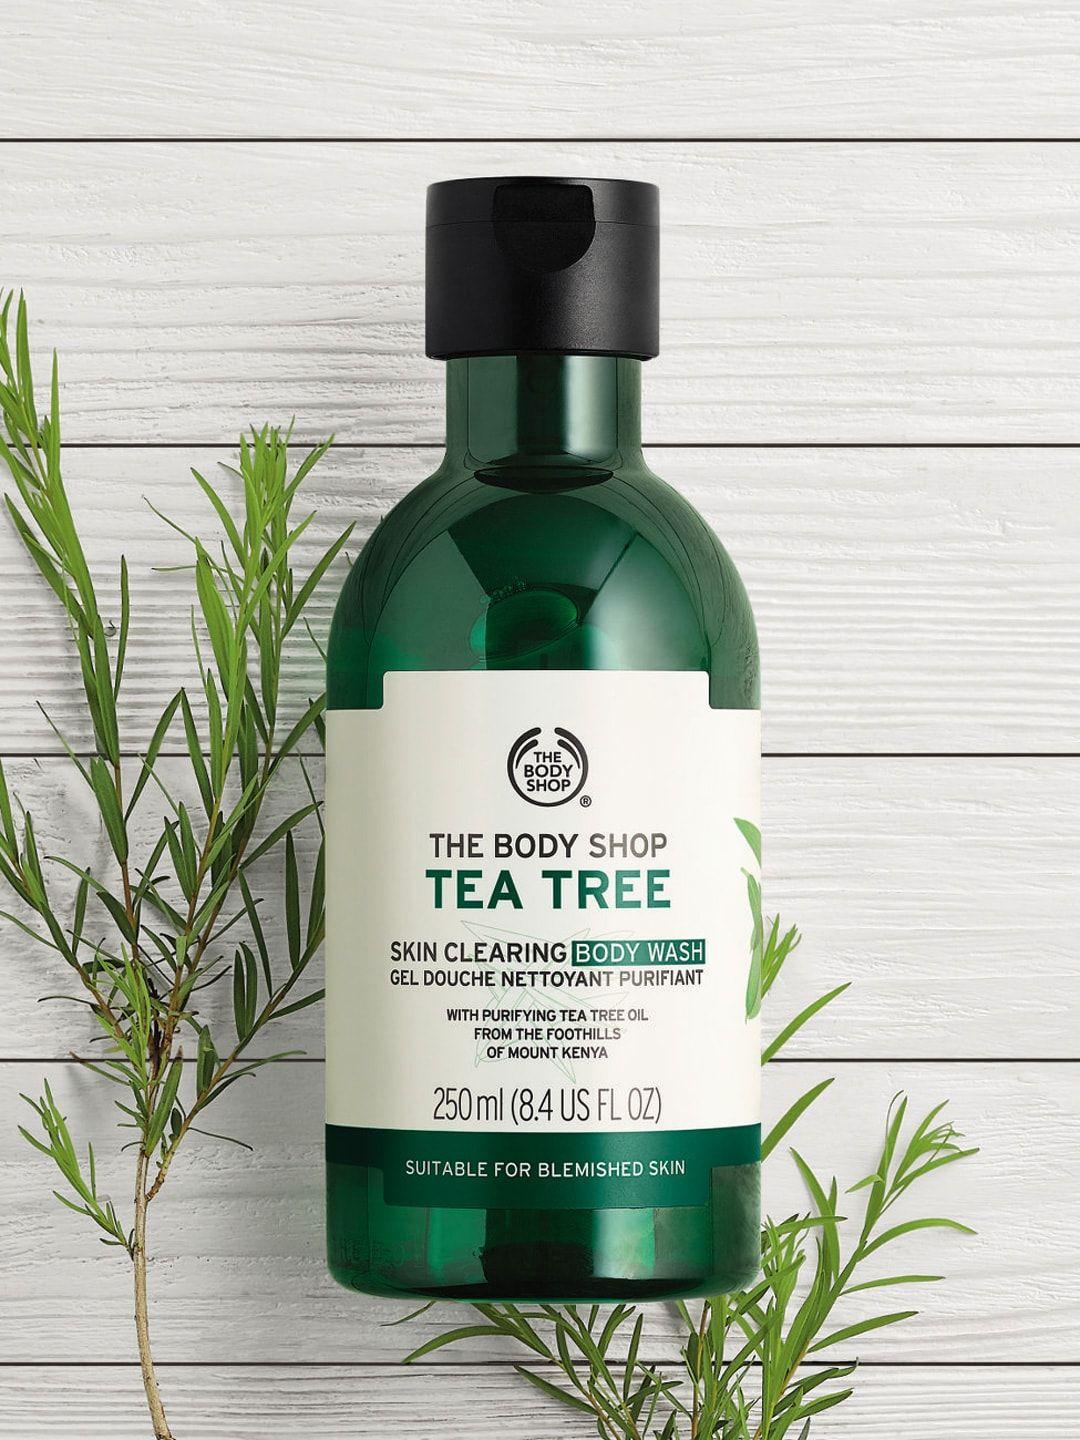 the body shop vitamin e range skin clearing body wash - tea tree 250 ml